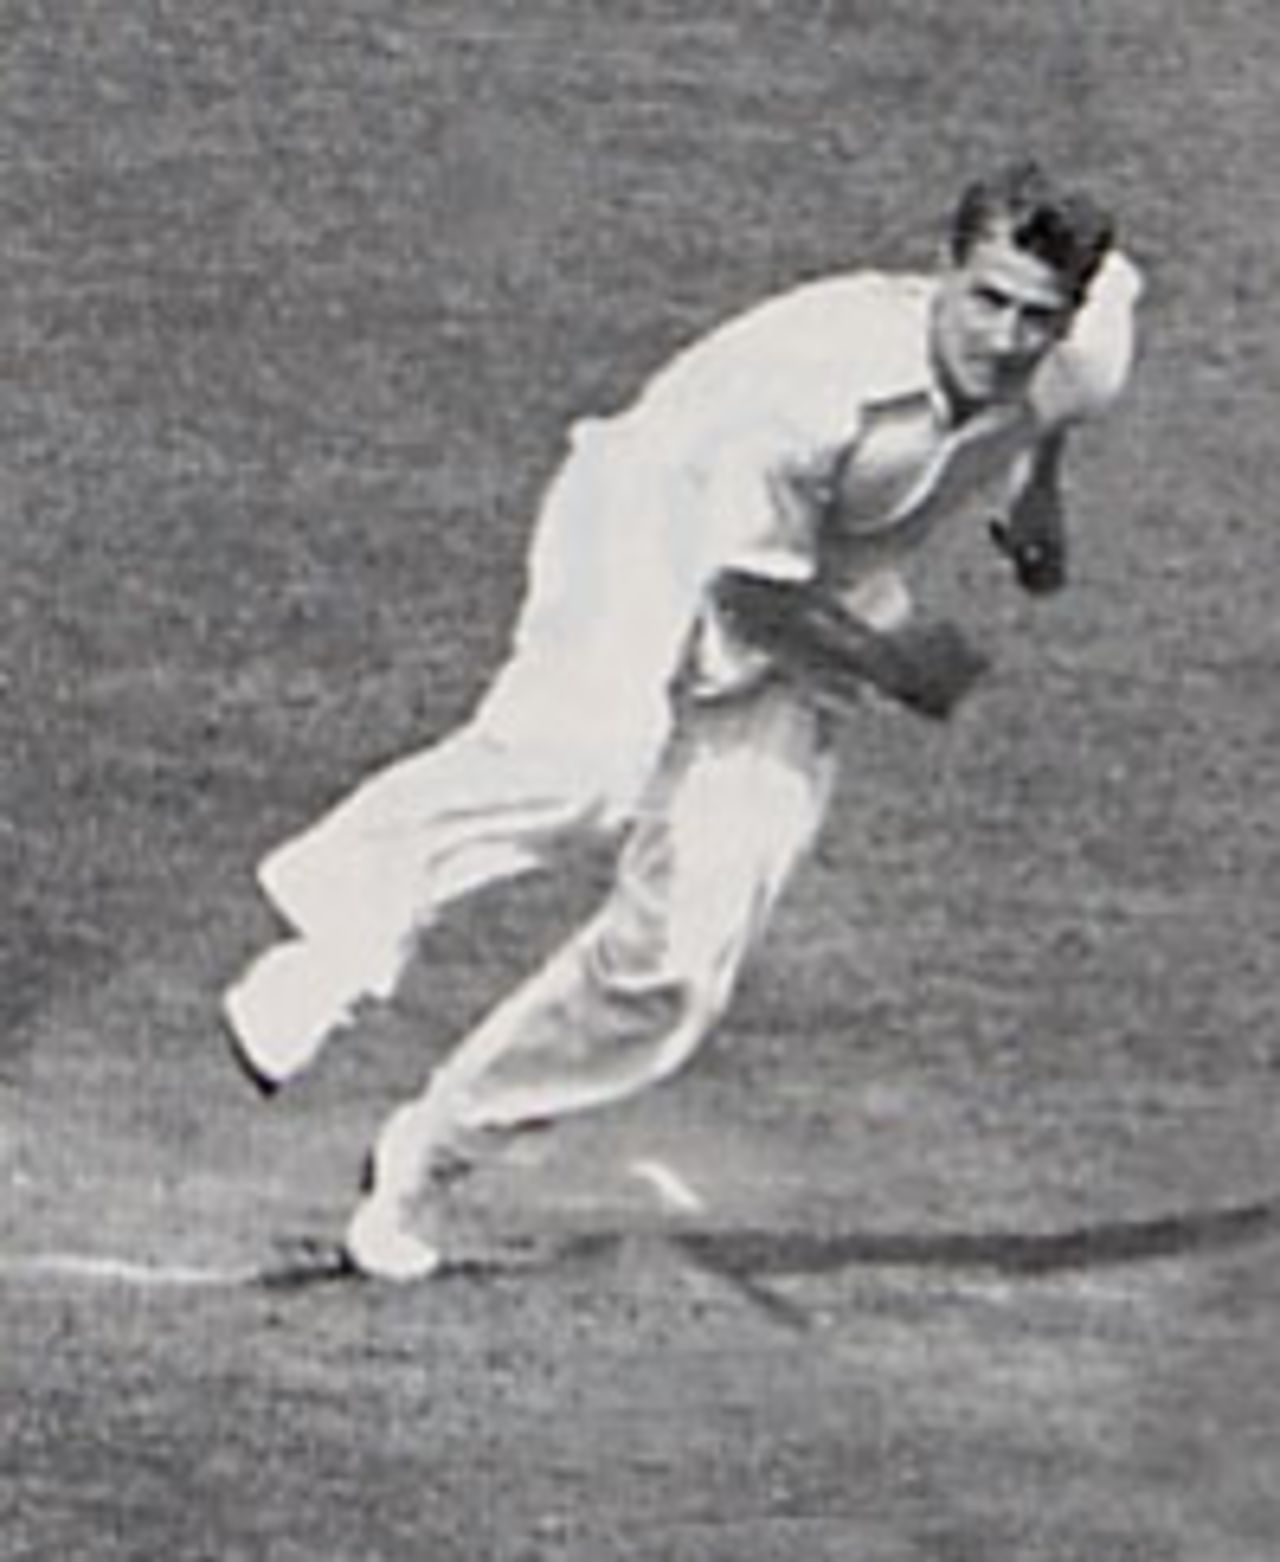 Harold Larwood bowling for Nottinghamshire in 1932